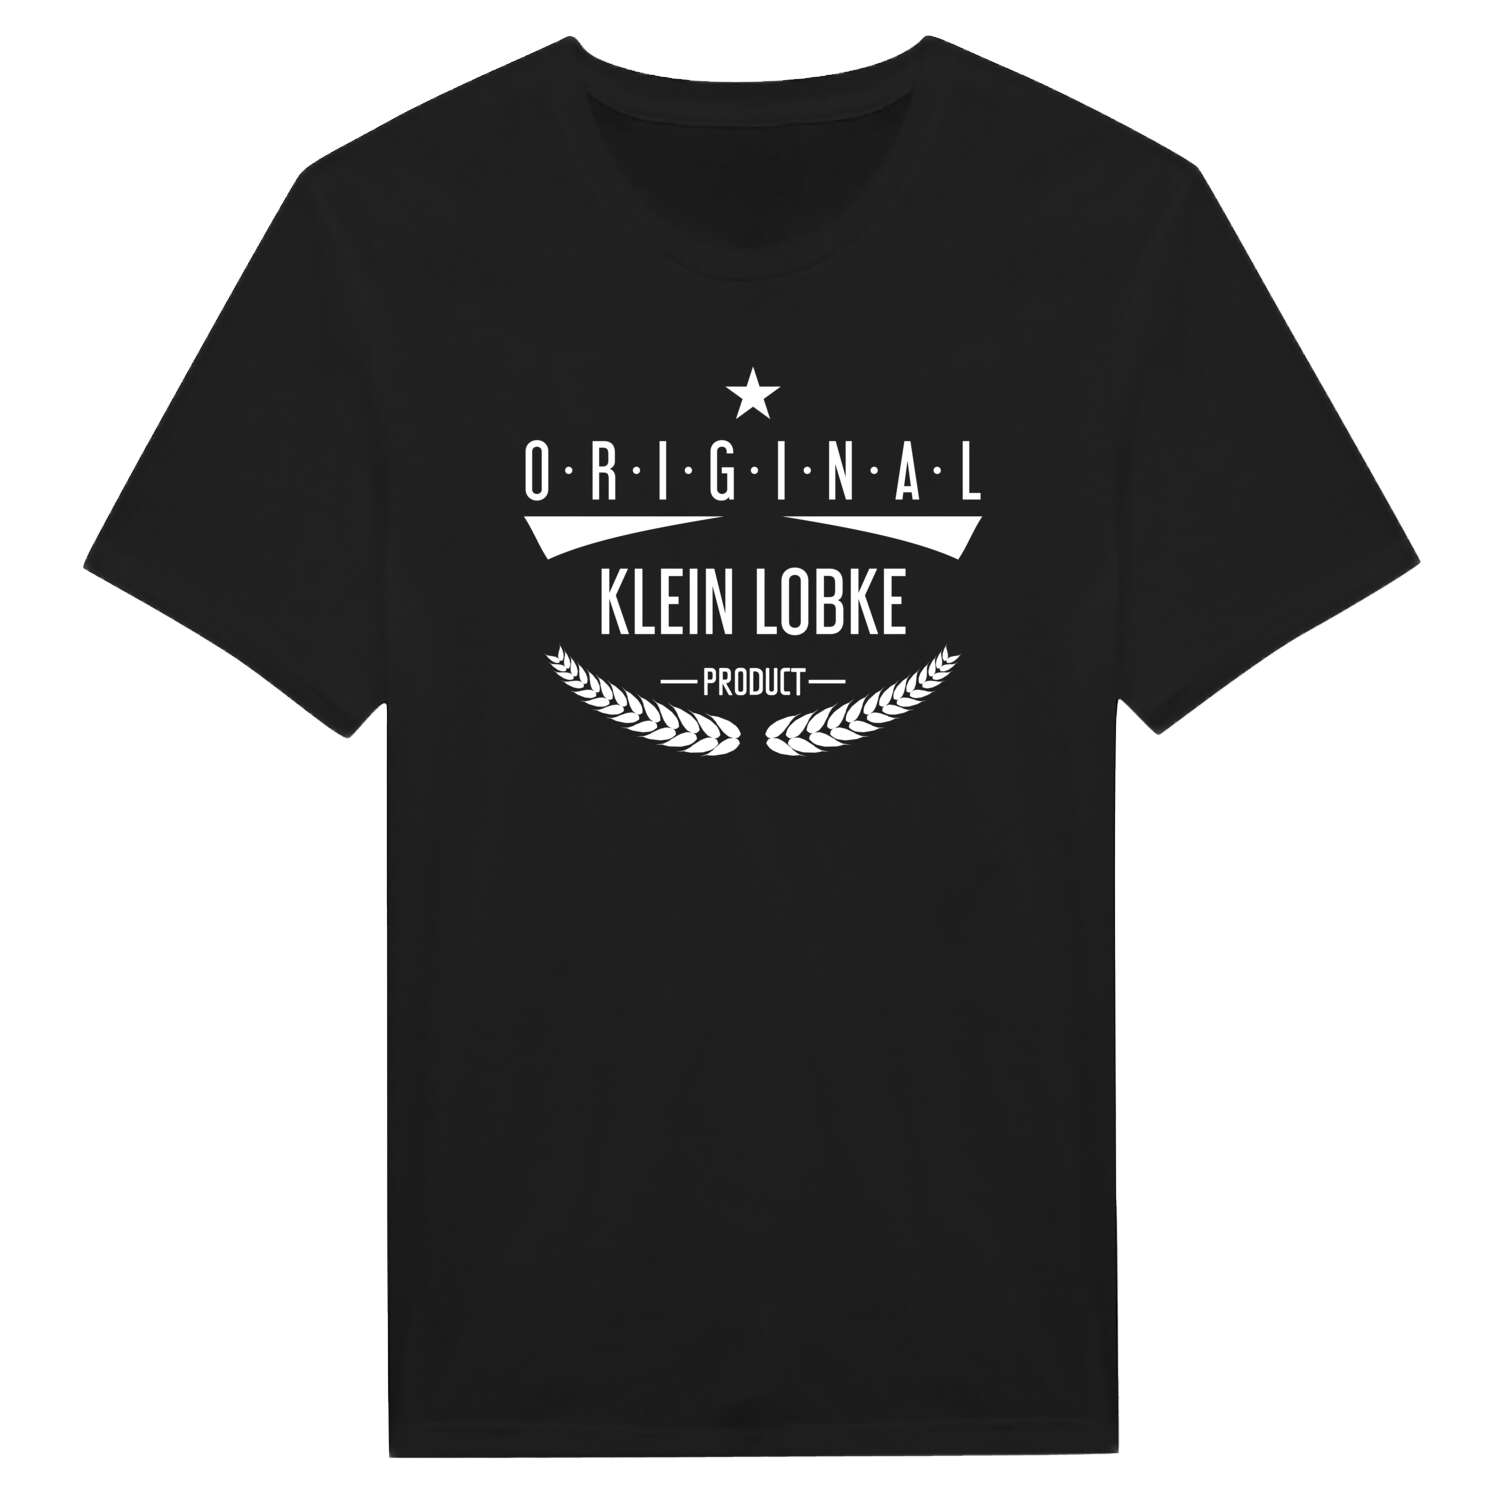 Klein Lobke T-Shirt »Original Product«